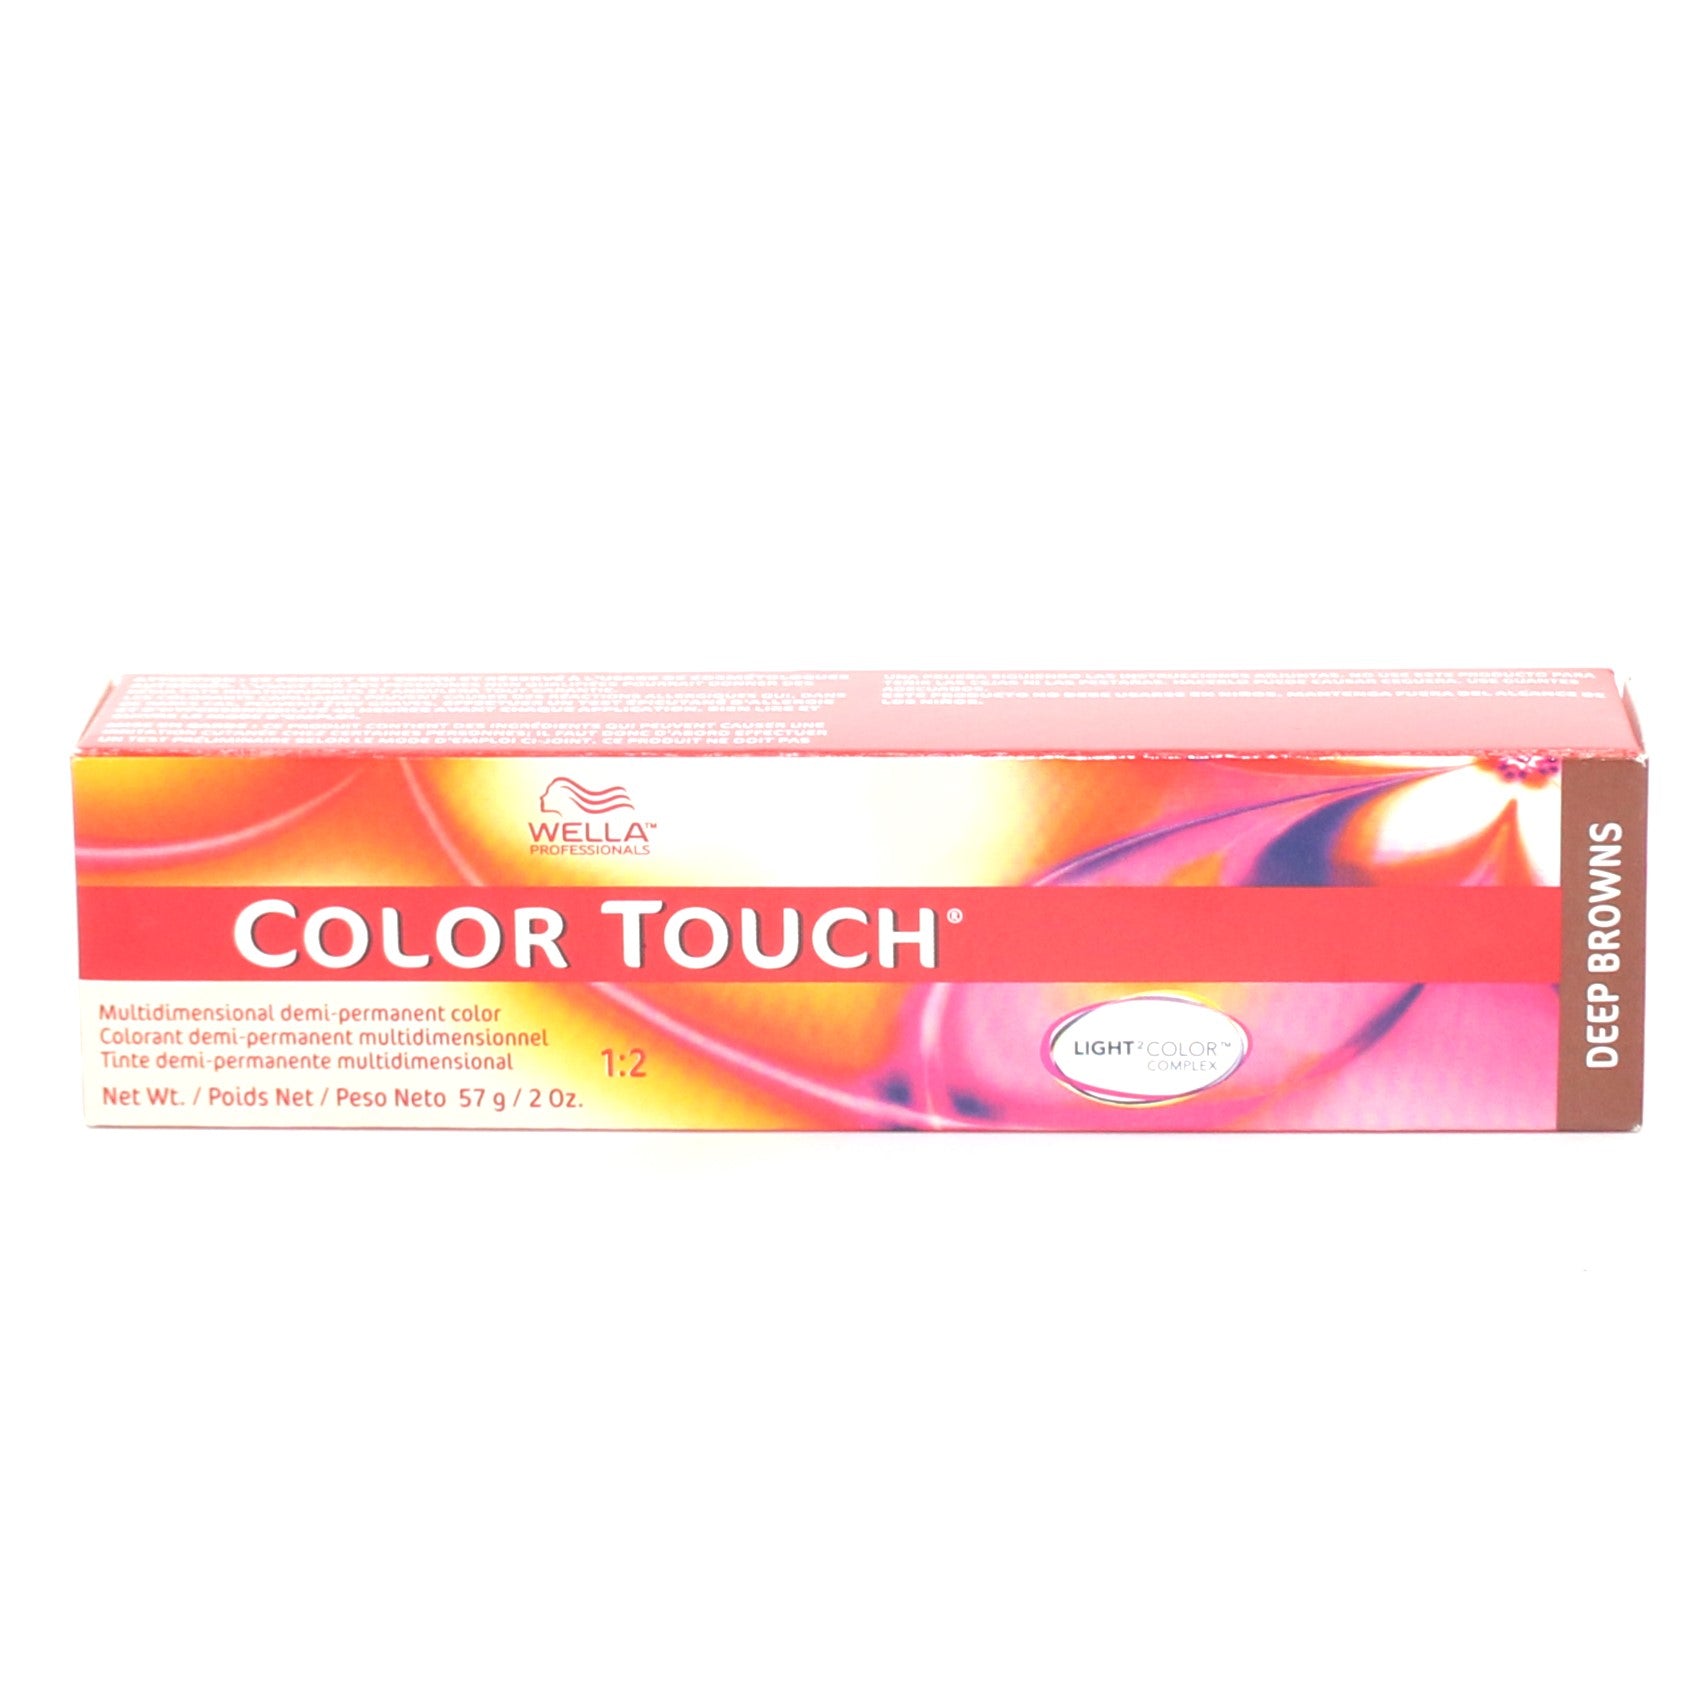 Wella Color Touch Multidimensional Demi-Permanent Color Deep Browns 2 oz